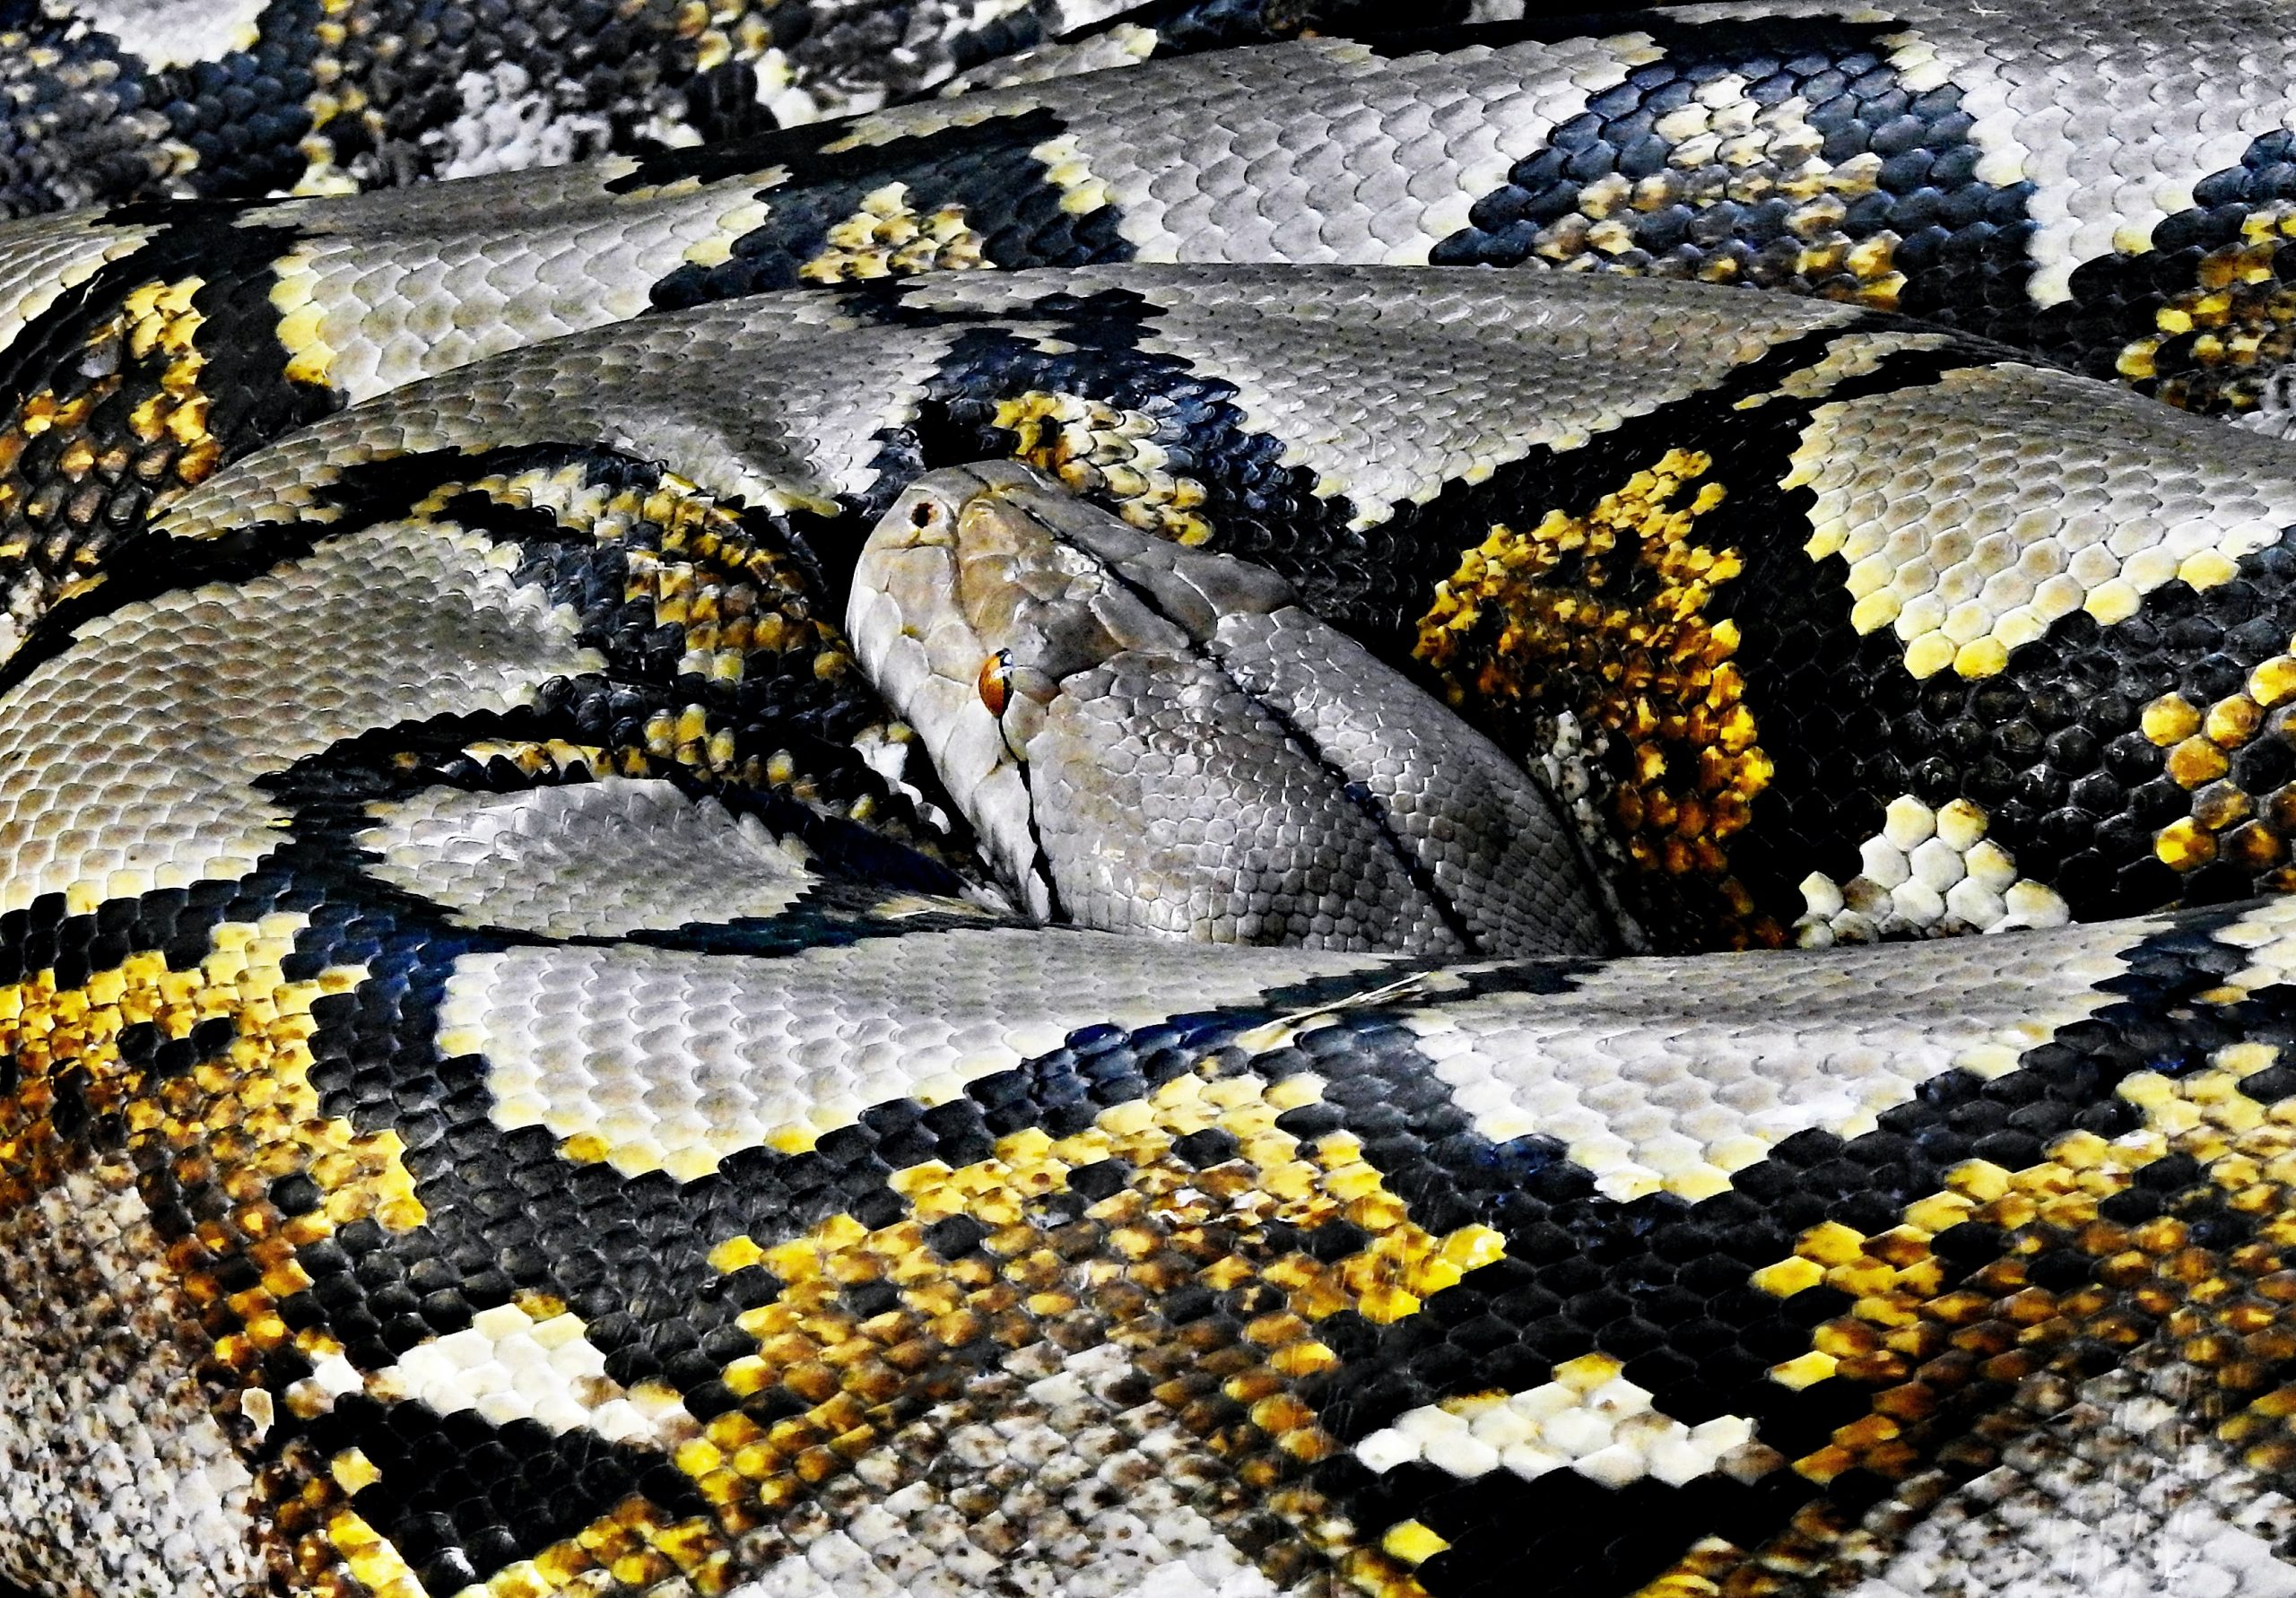 Photo of python by David Clode on Unsplash